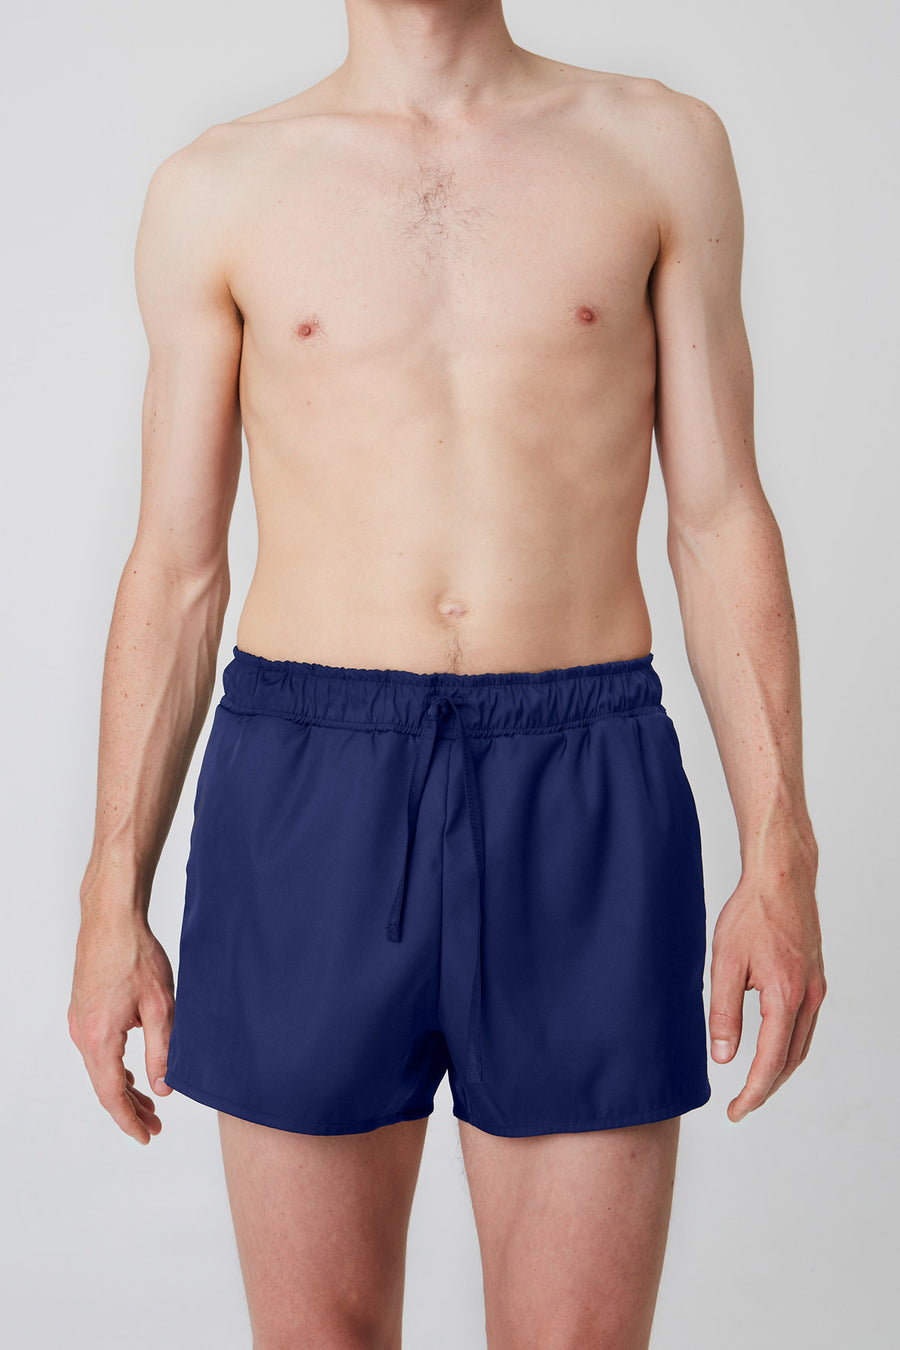 Shorts – boxer 1, dark blue